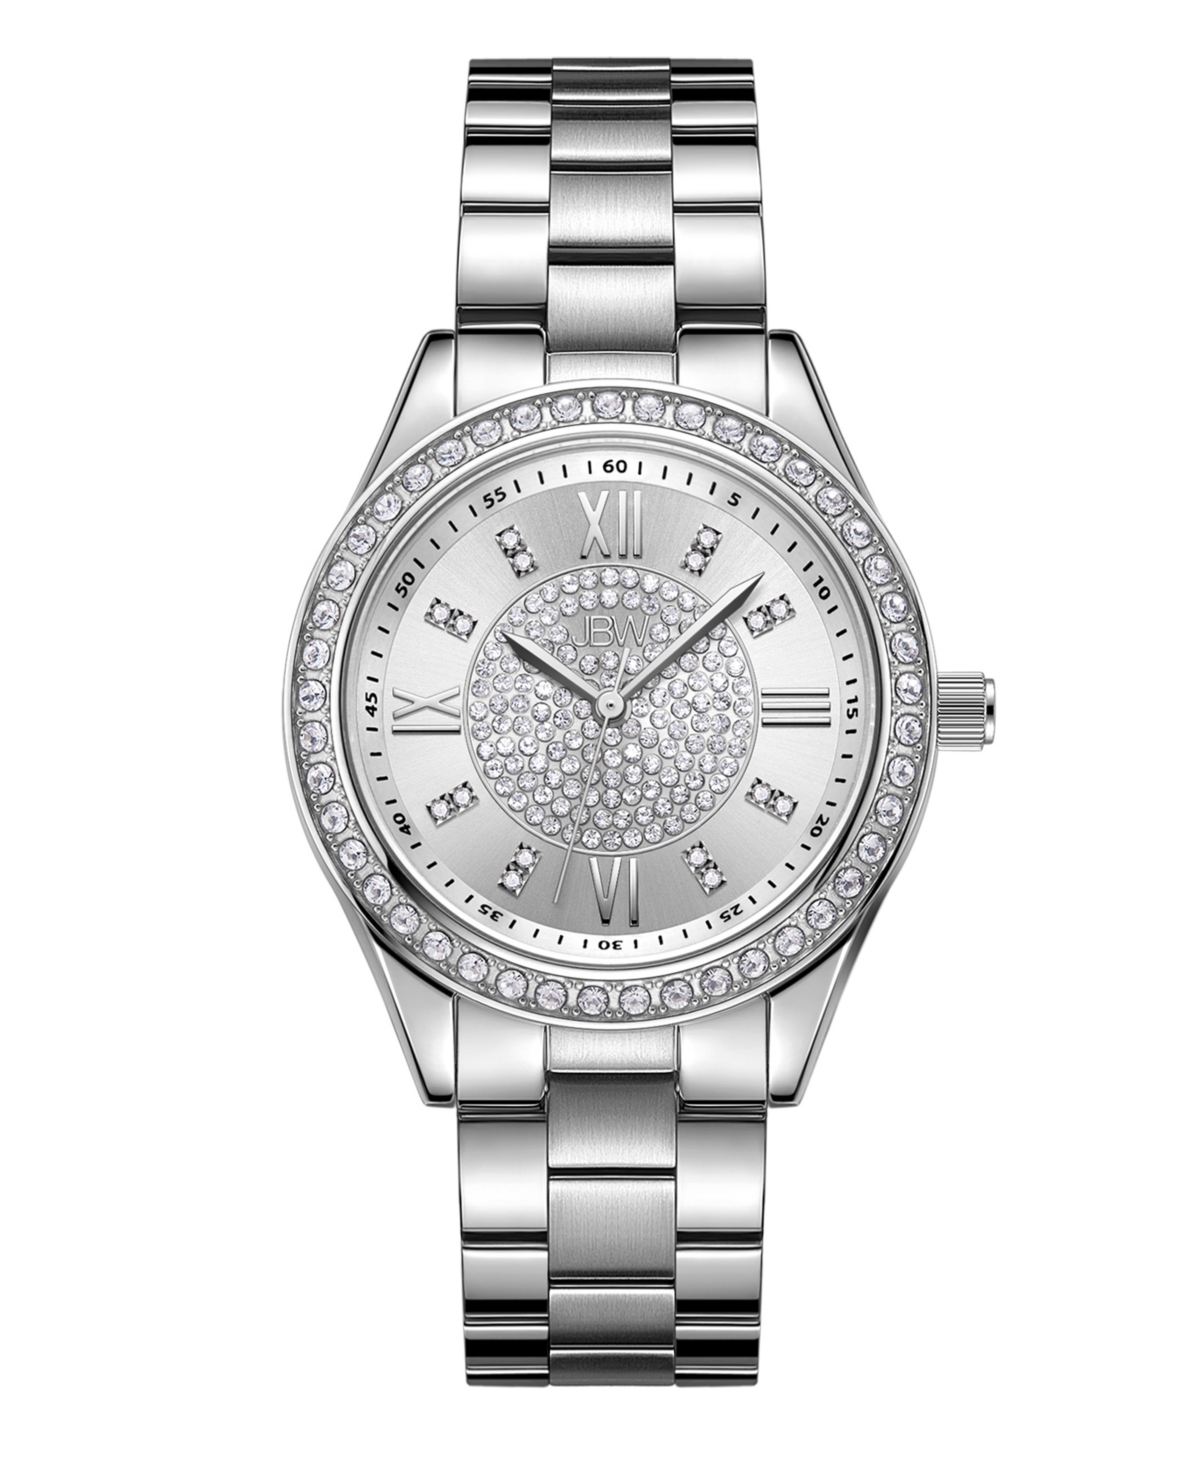 Women's Mondrian Silver-Tone Stainless Steel Watch, 34mm - Stainless Steel